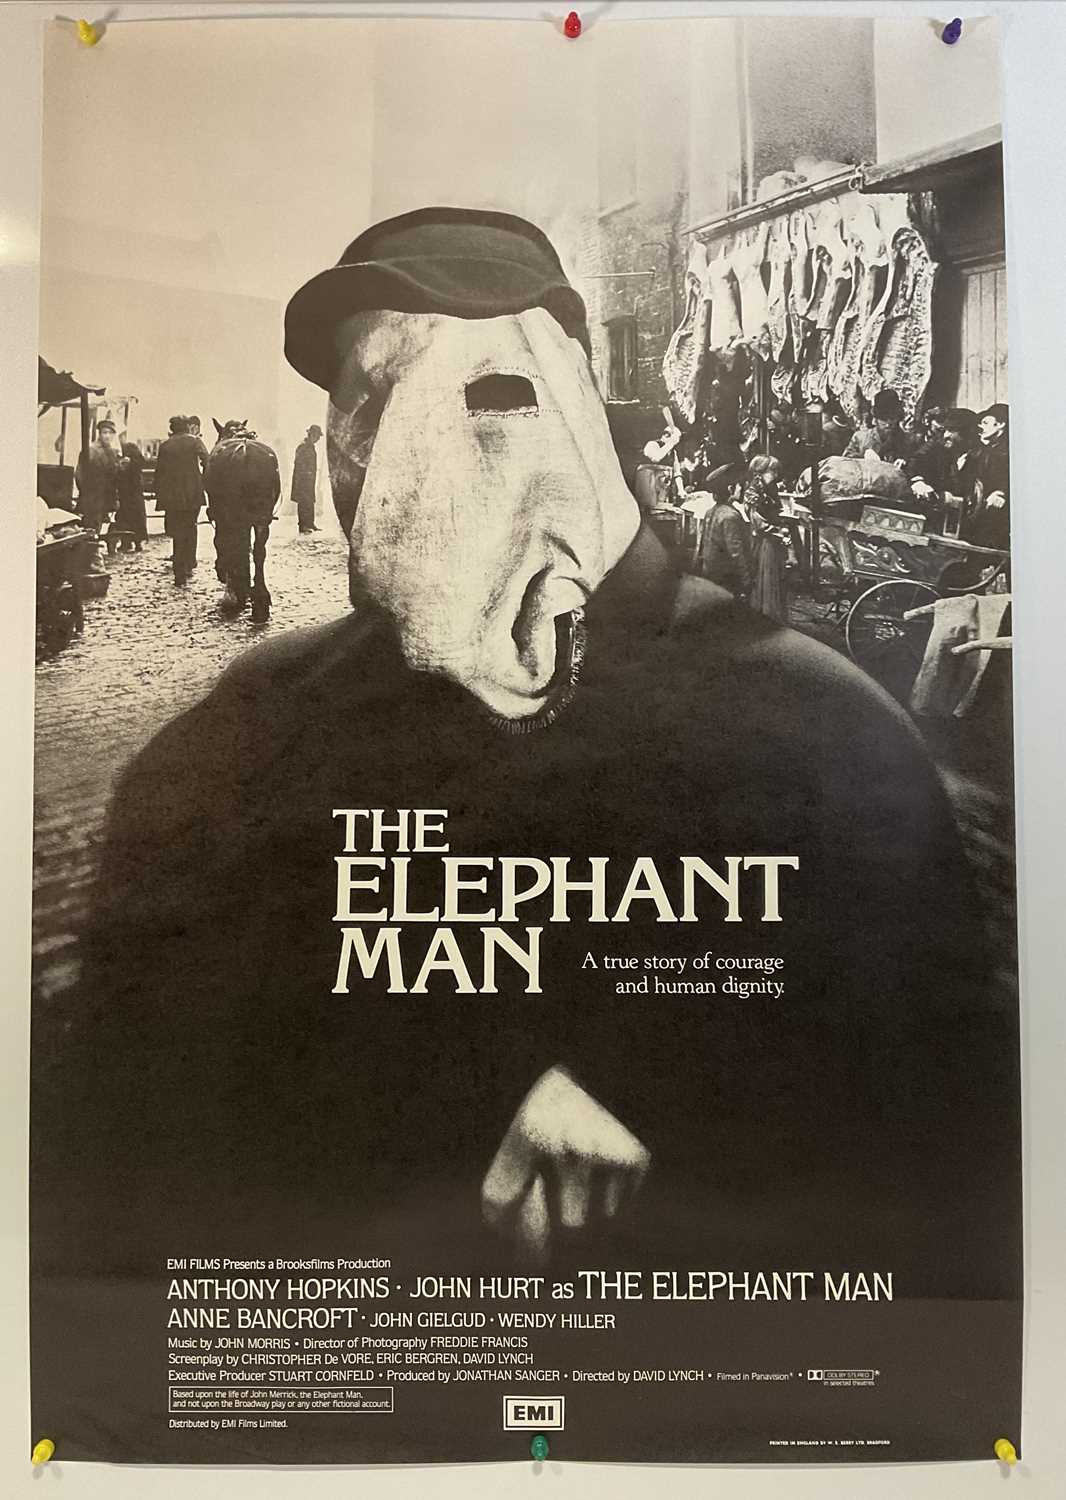 THE ELEPHANT MAN (1980) U.S one-sheet, rolled.